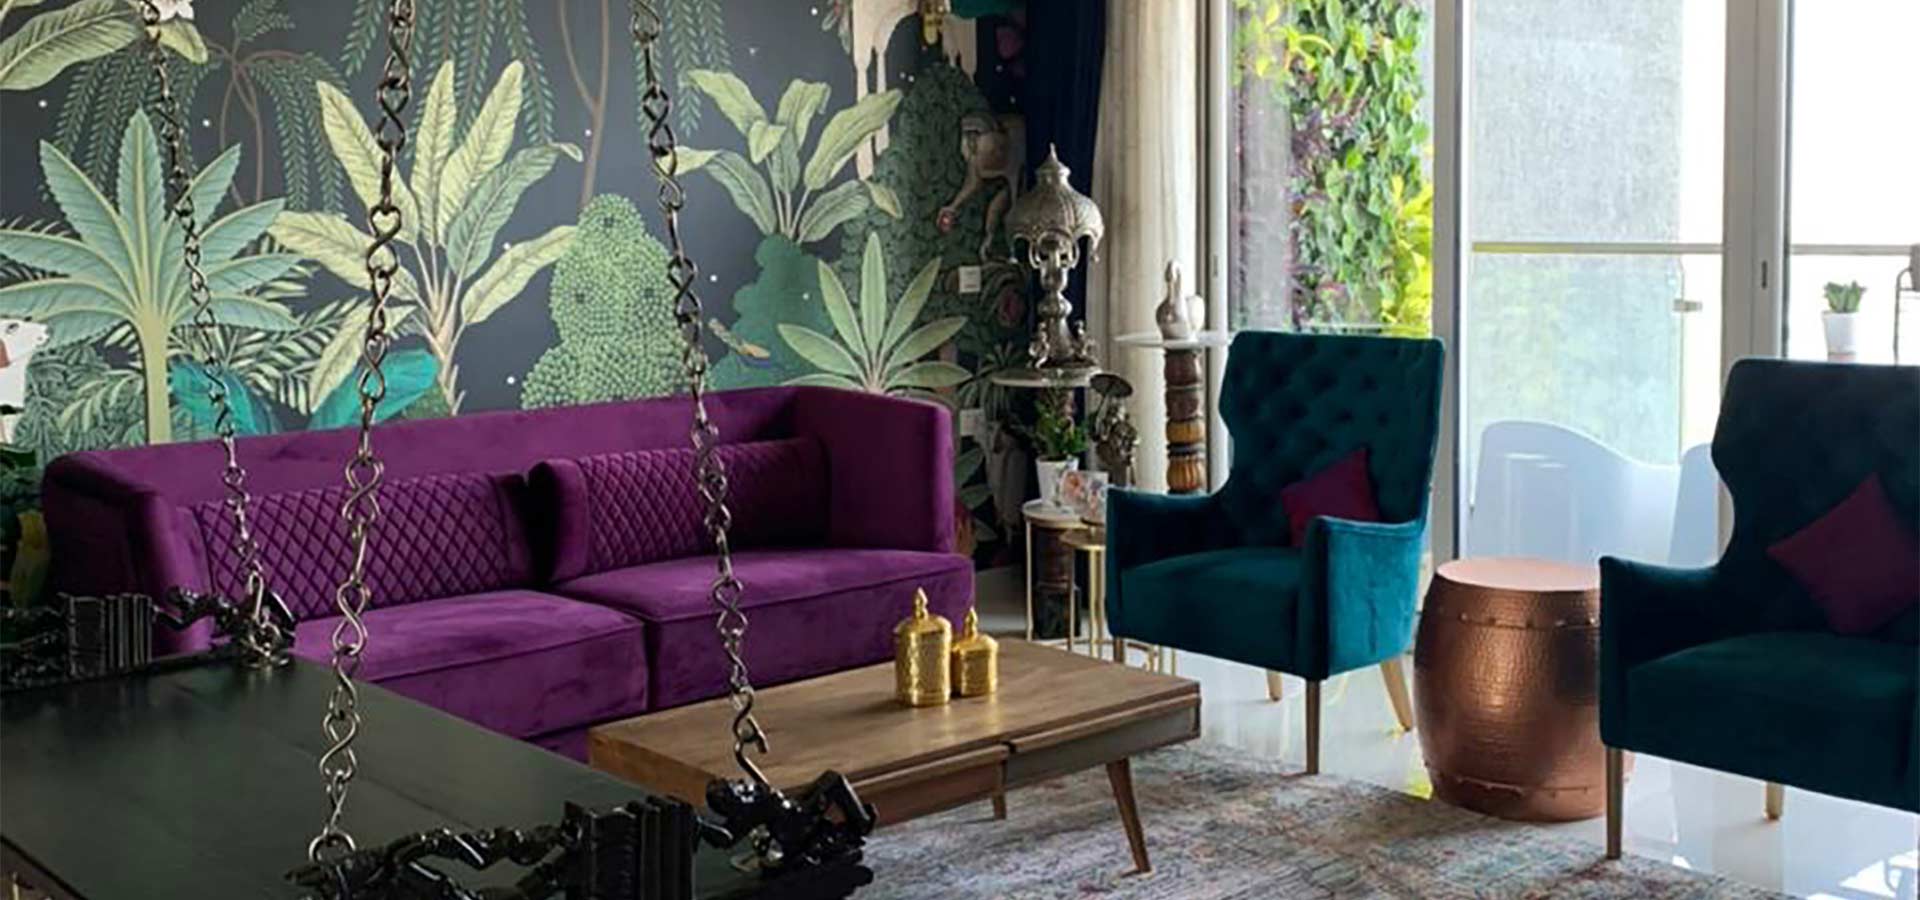 Modern living room with sleek furniture